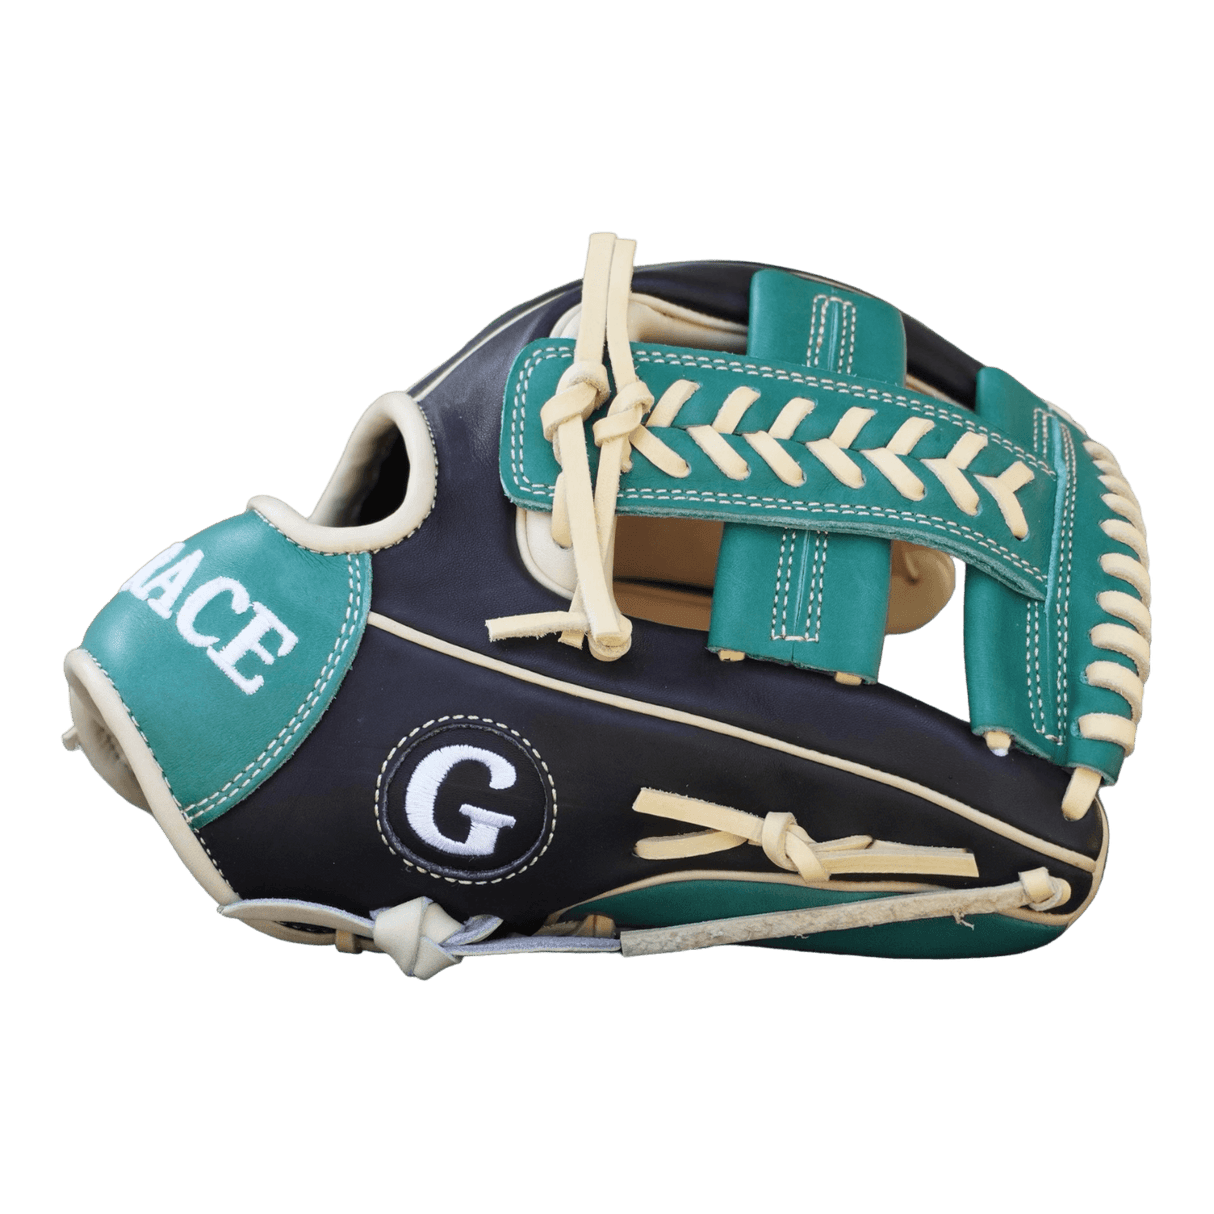 Grace Glove Co 11.25” In Black Green Infield I Web Glove - CustomBallgloves.com